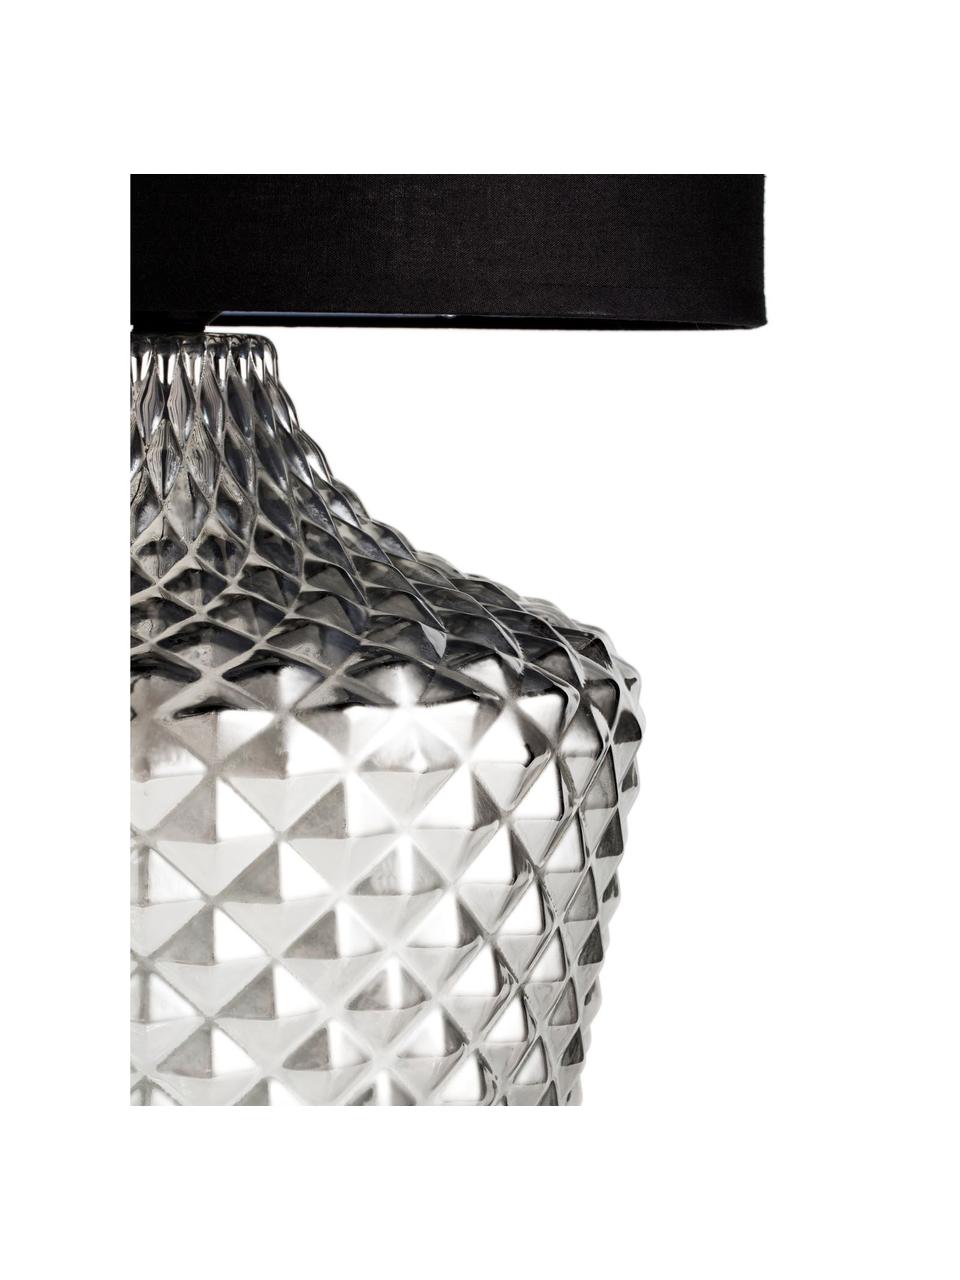 Grote tafellamp Brilliant Jewel van glas, Lampenkap: stof, Lampvoet: glas, Wit, zwart, Ø 32 x H 56 cm